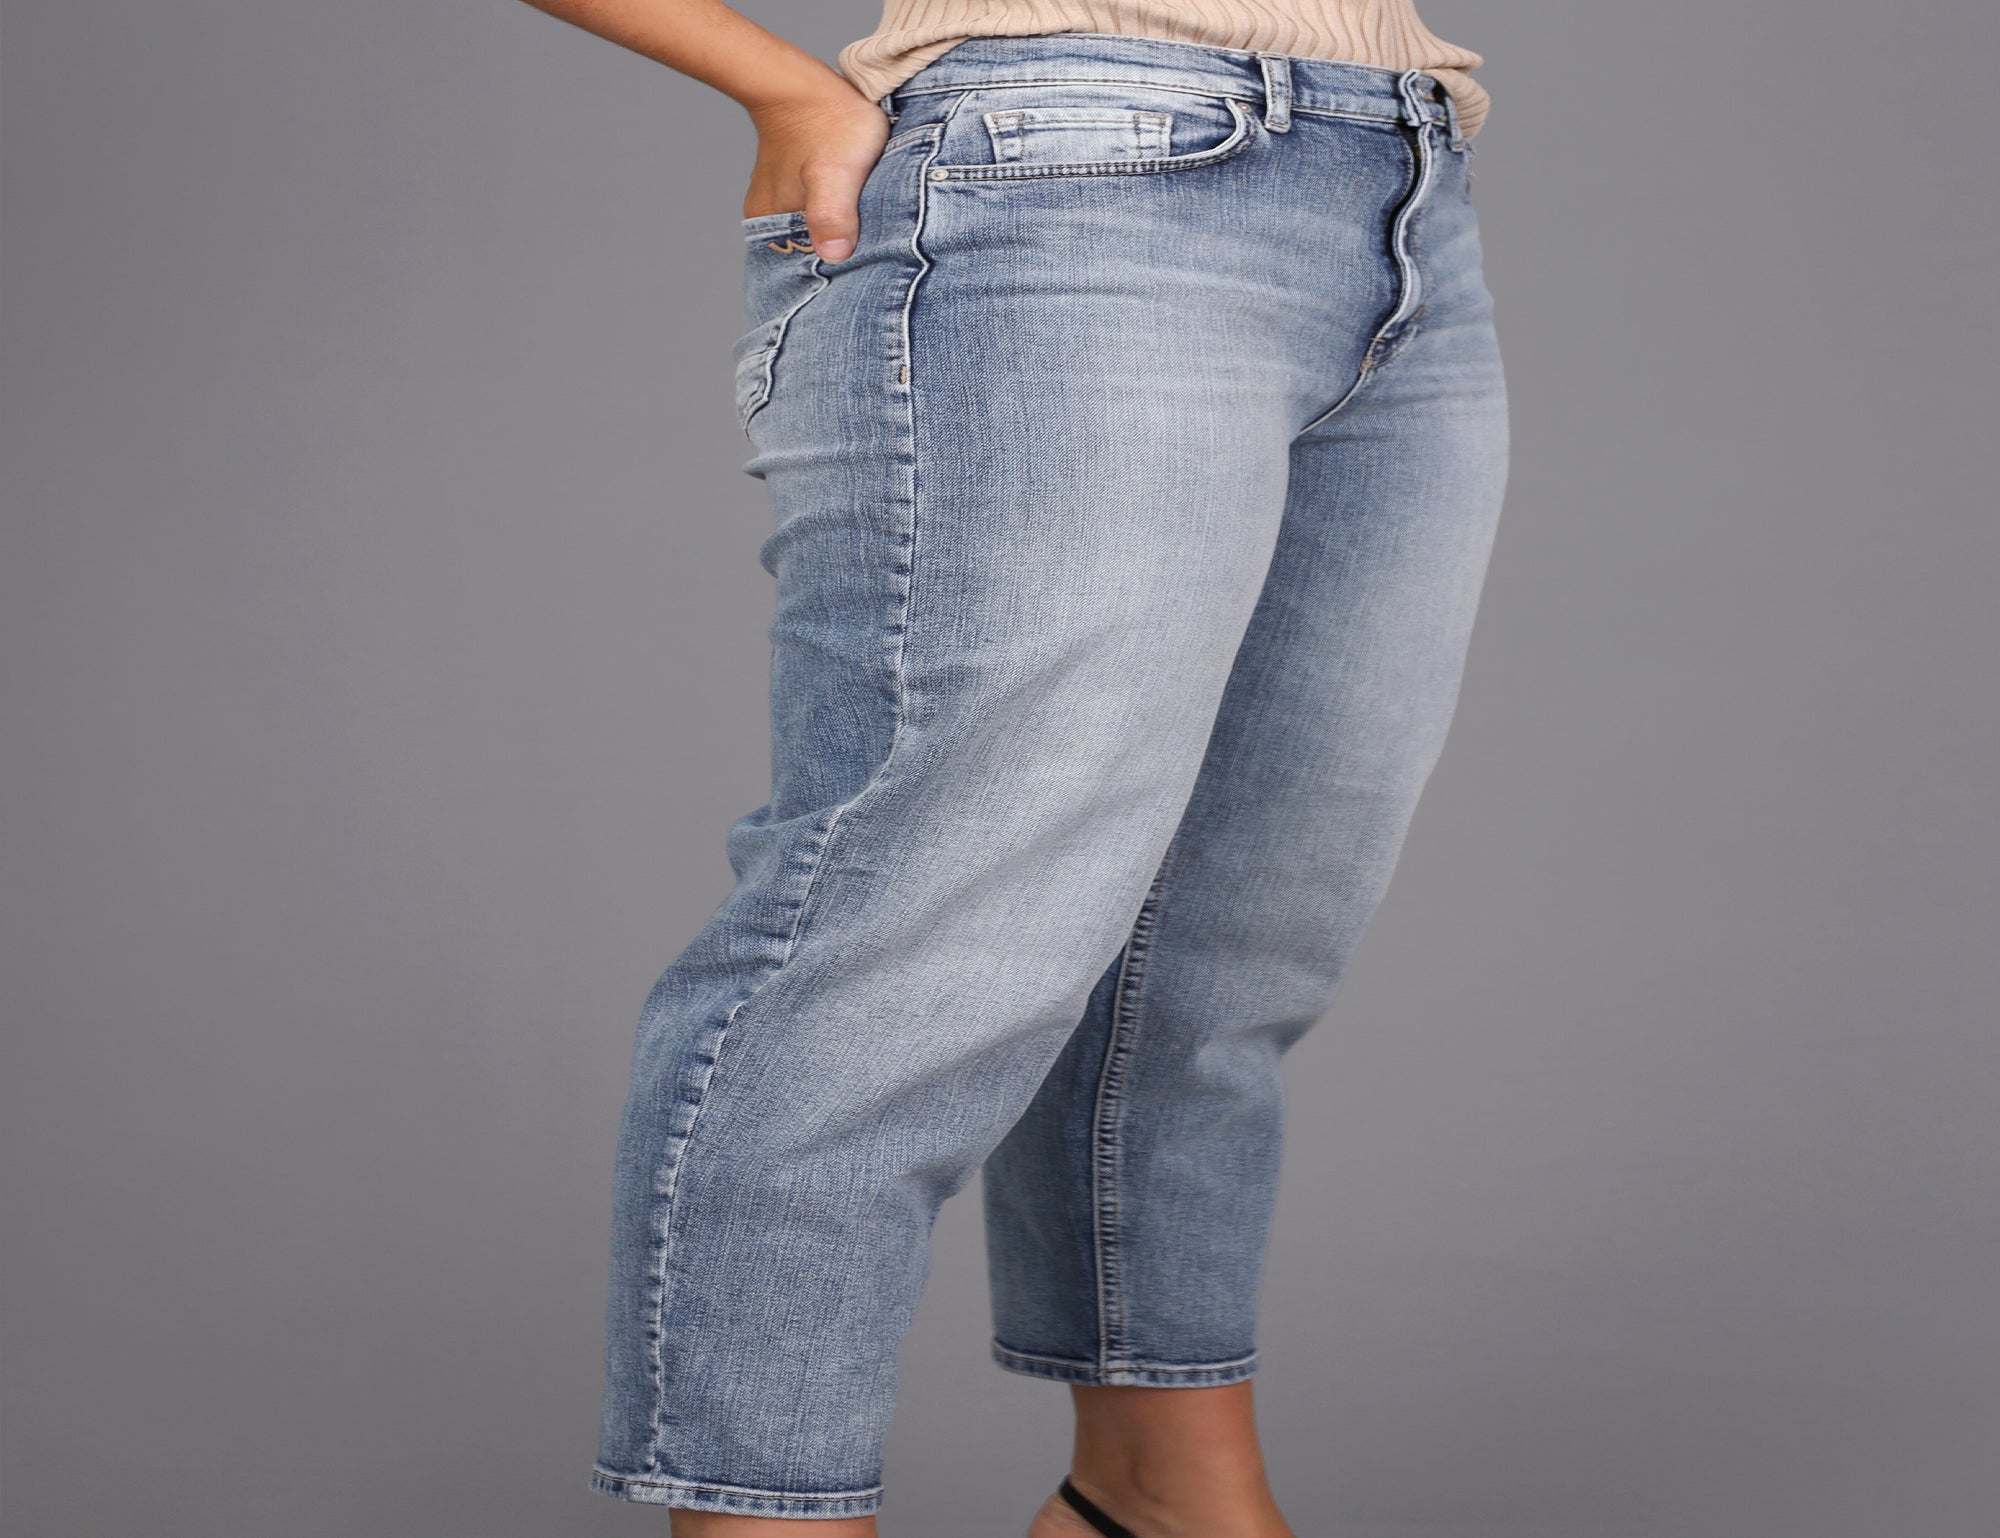 Ilana Anise X Jean - Blue - Pants - Full Length - Women's Clothing - Storm